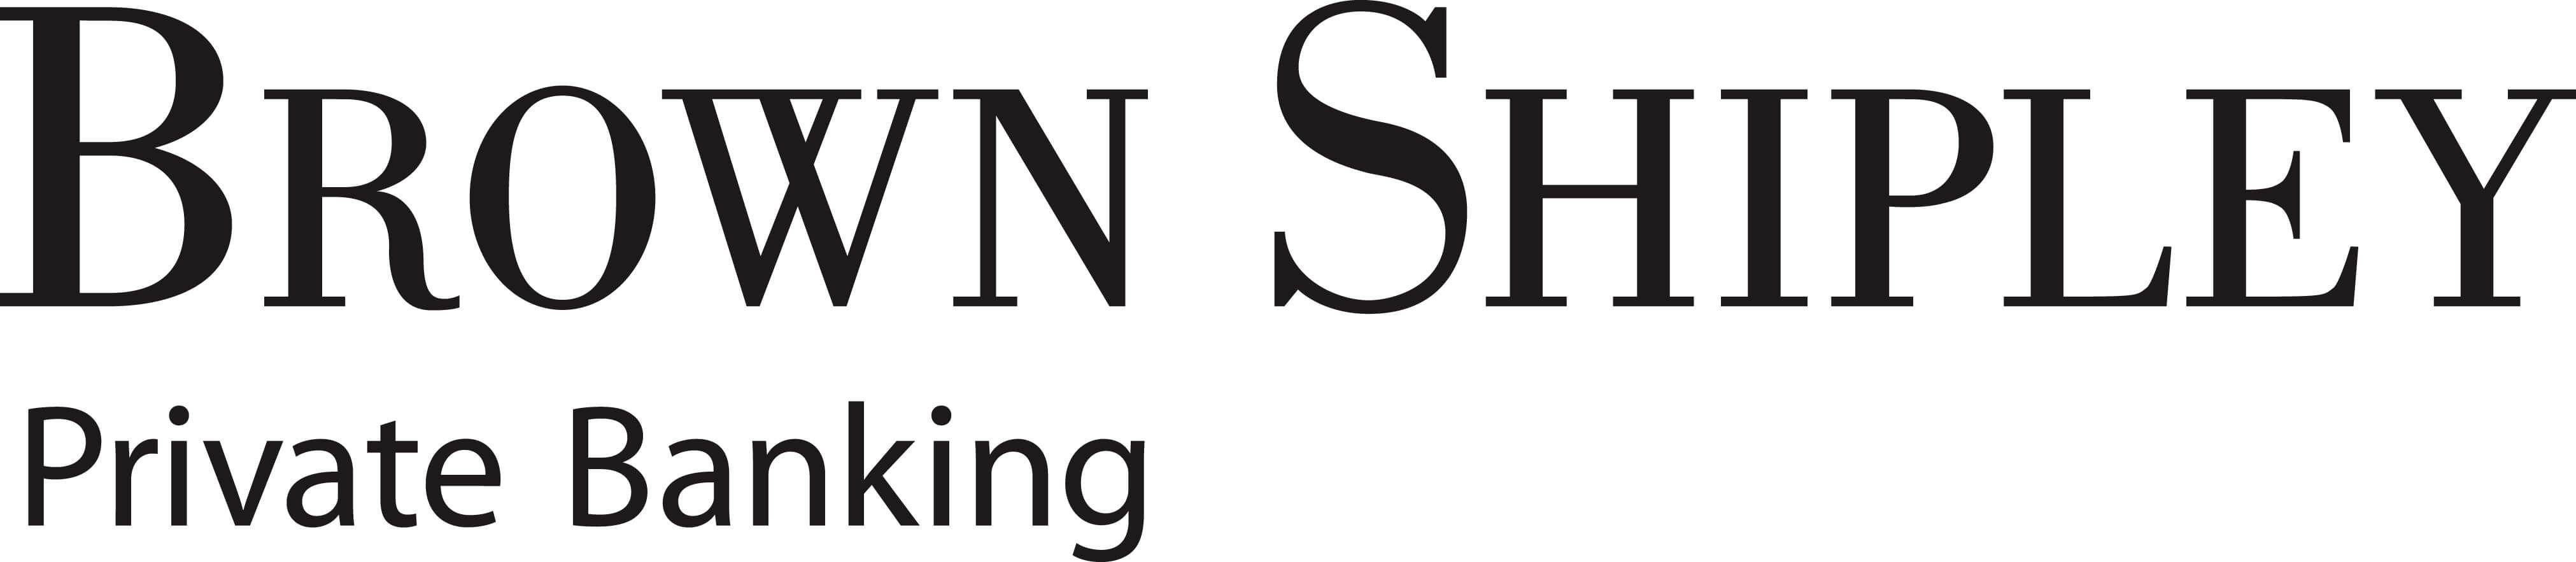 Shipley Logo - Companies working with us Brown Shipley logo | Acorns Children's Hospice